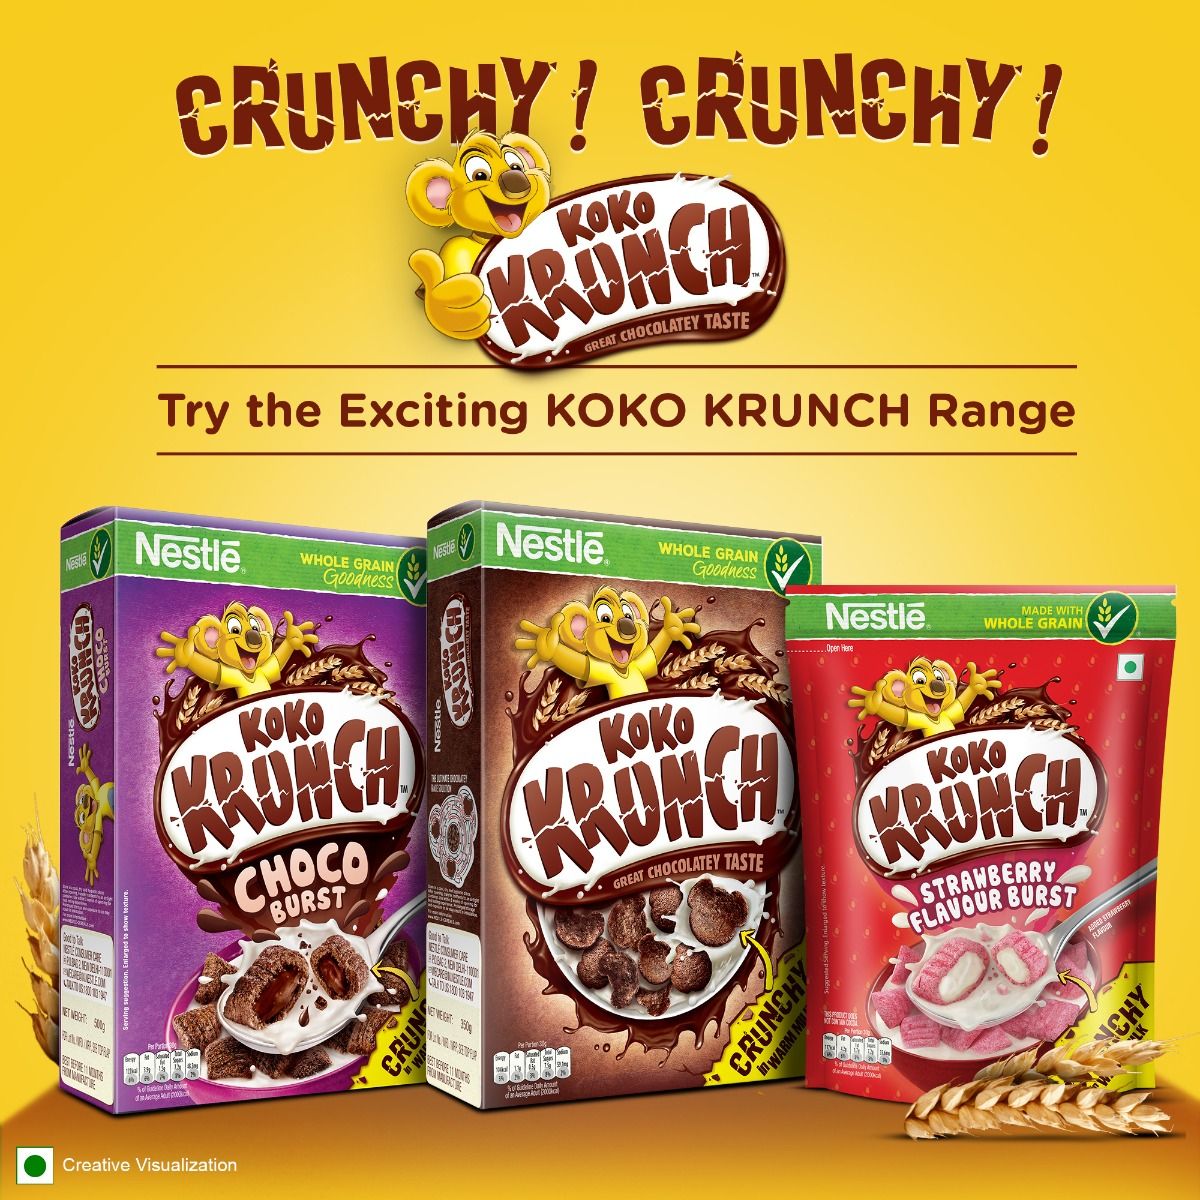 Nestle Koko Krunch Choco Burst, 250 gm, Pack of 1 